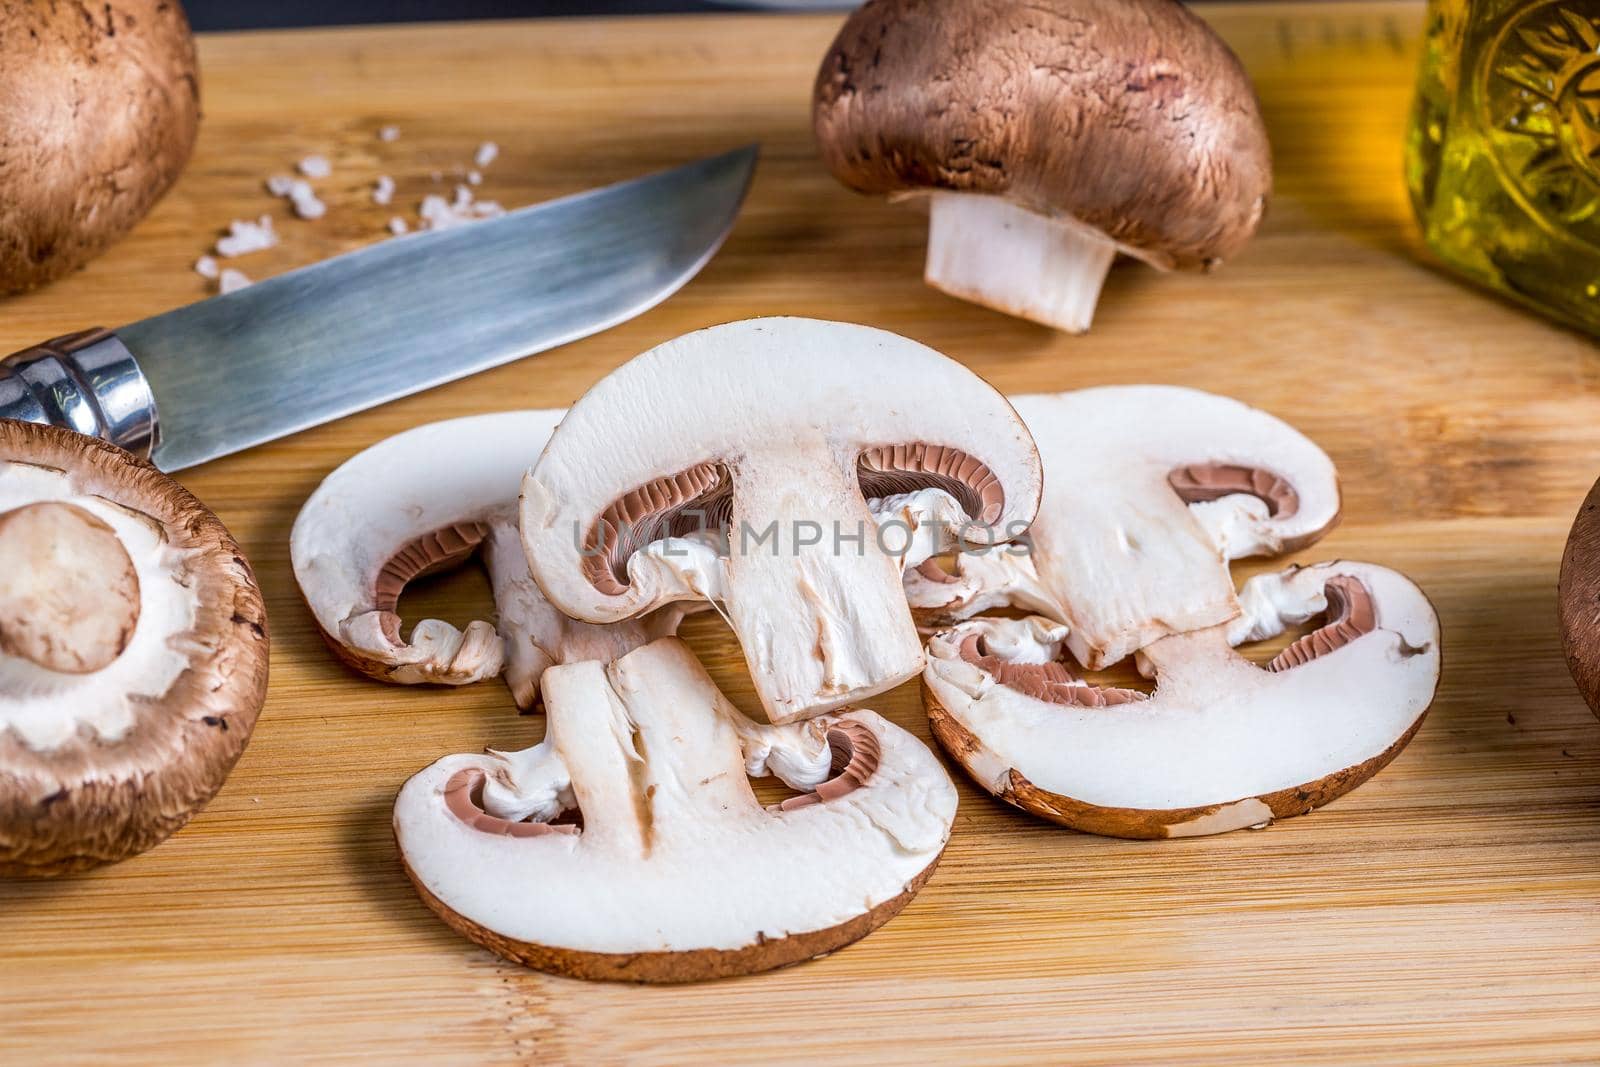 Royal champignons, chopped mushrooms on wooden board by galinasharapova